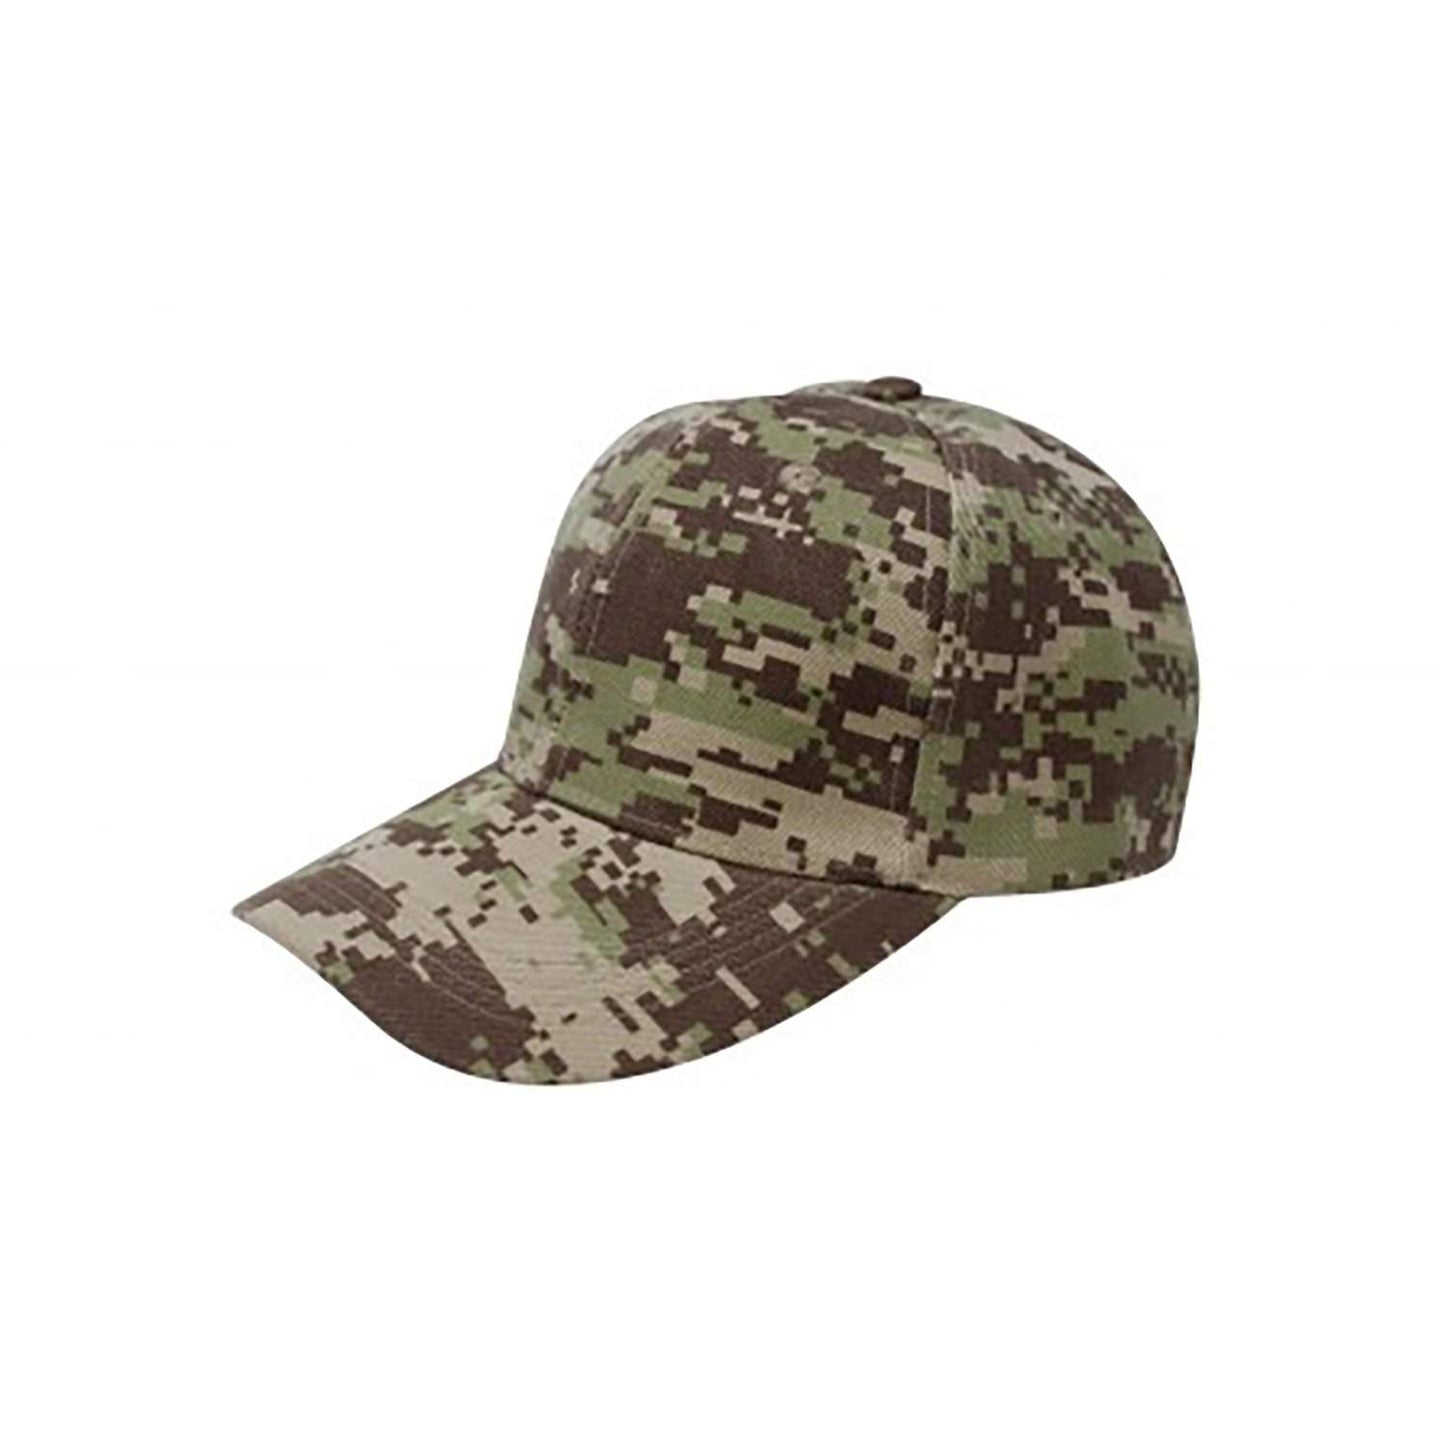 Pack of 15 Bulk Wholesale Plain Baseball Cap Hat Adjustable